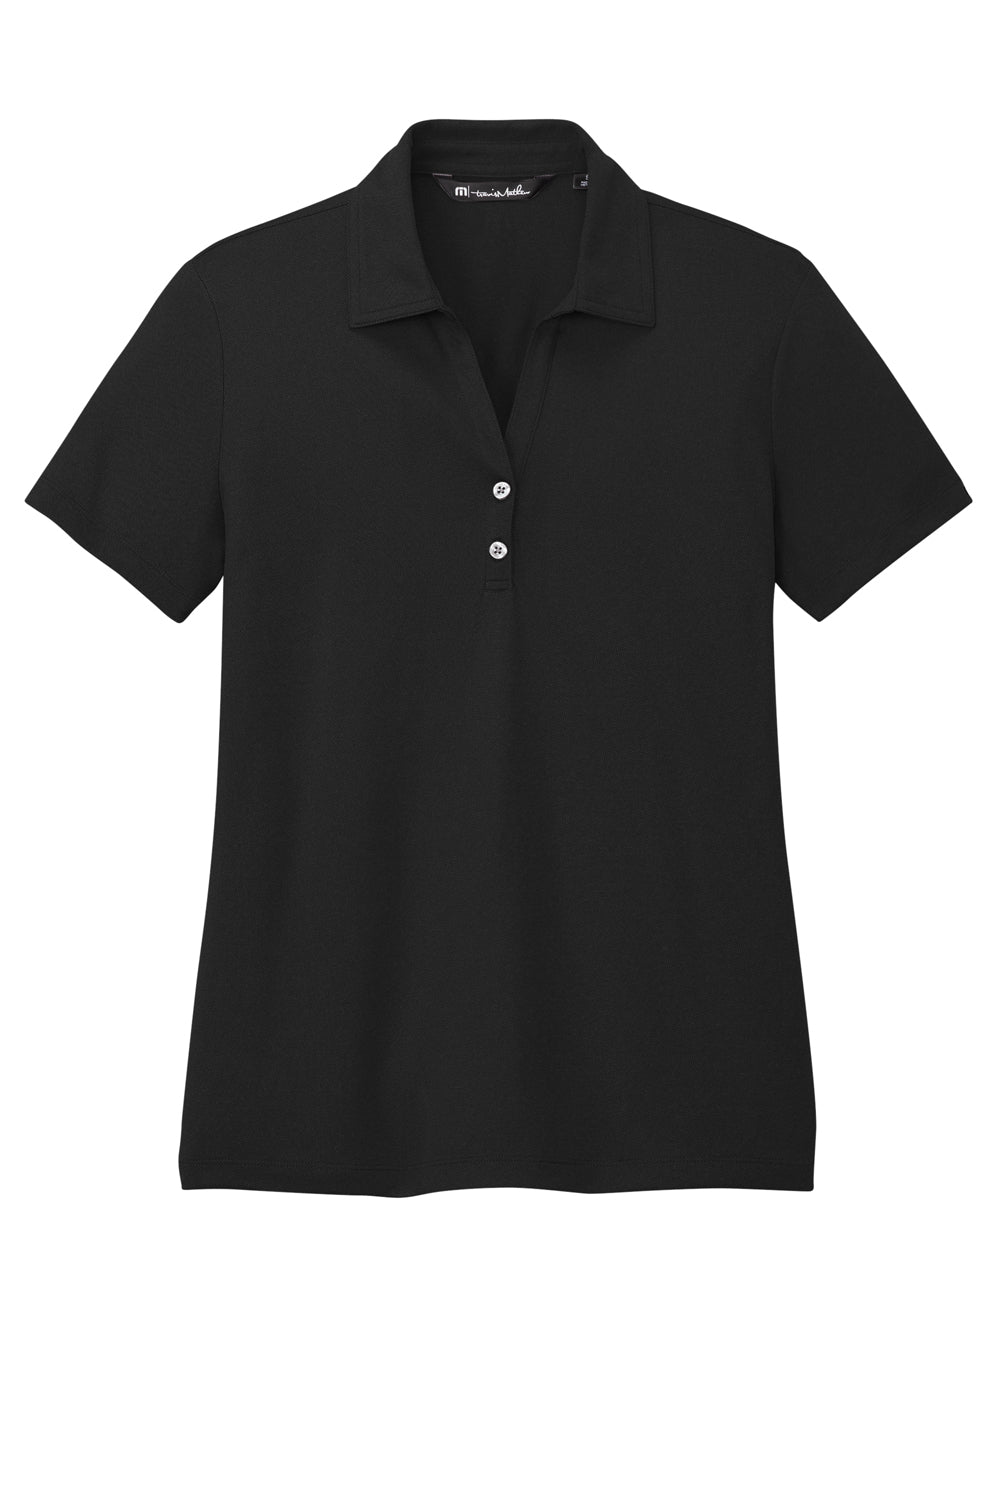 TravisMathew TM1WX002 Womens Coto Performance Wrinkle Resistant Short Sleeve Polo Shirt Black Flat Front